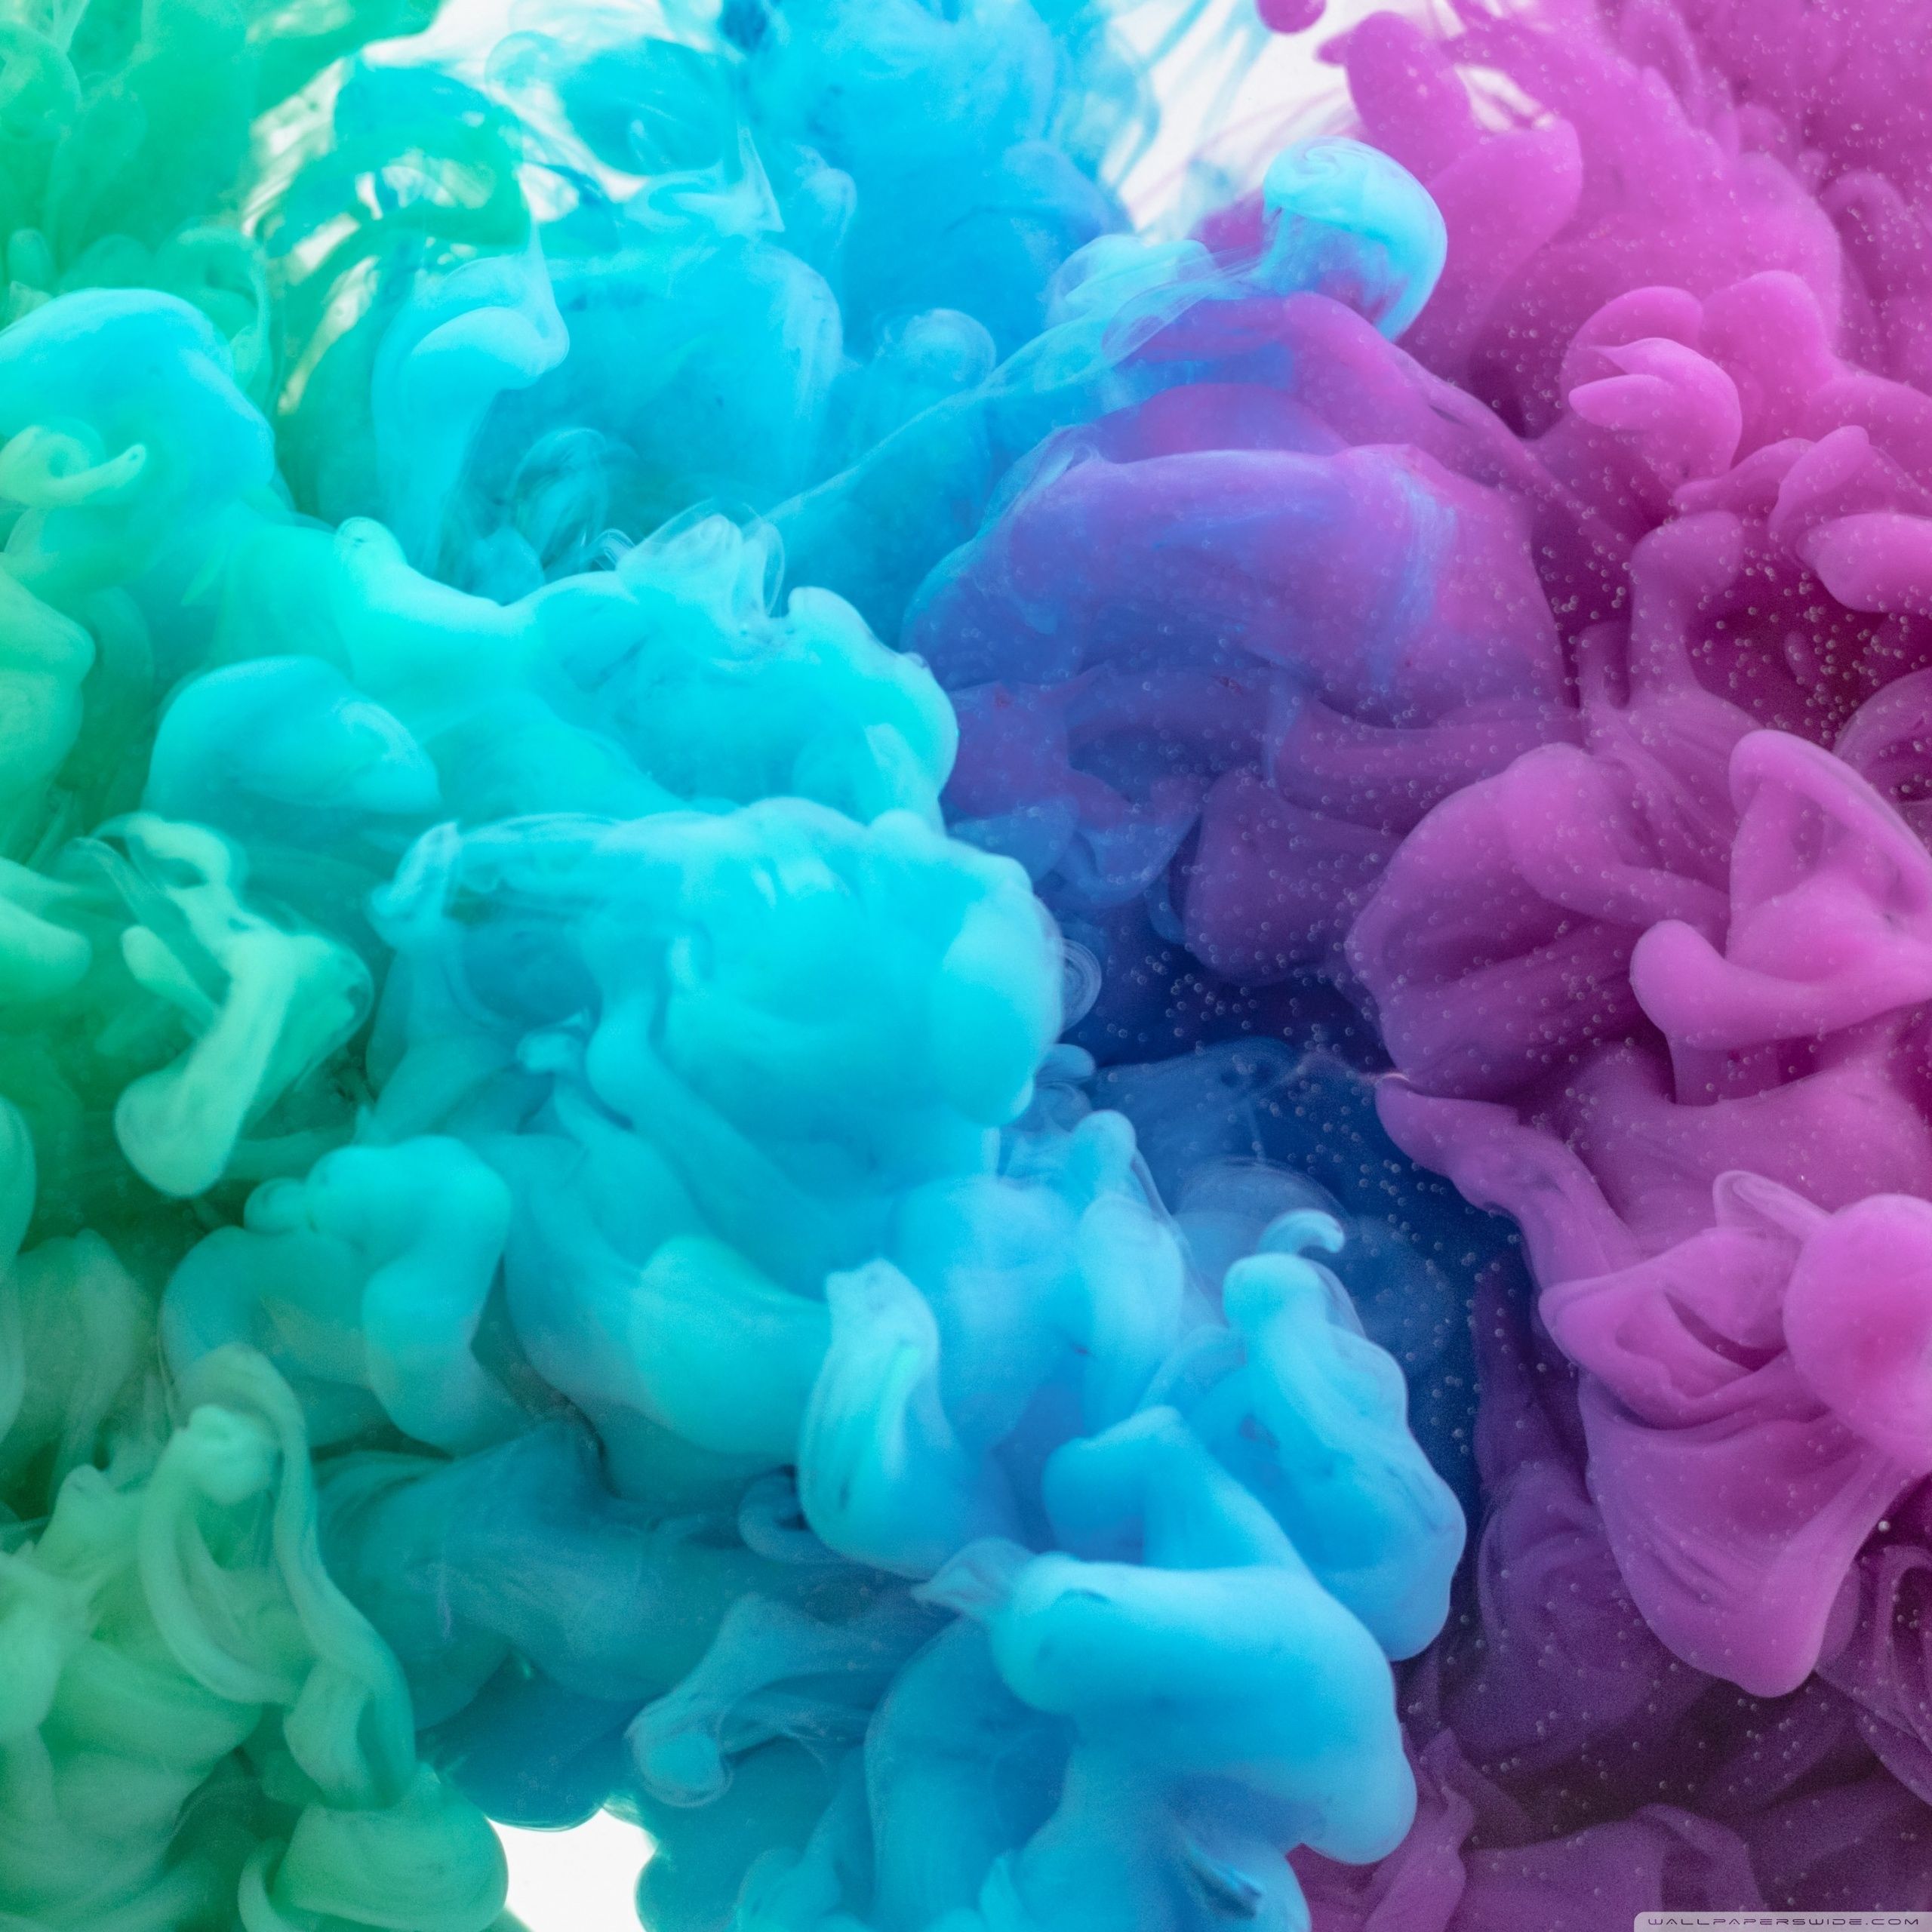 Kinemaster Colour Image Download Wallpaper & Background Download